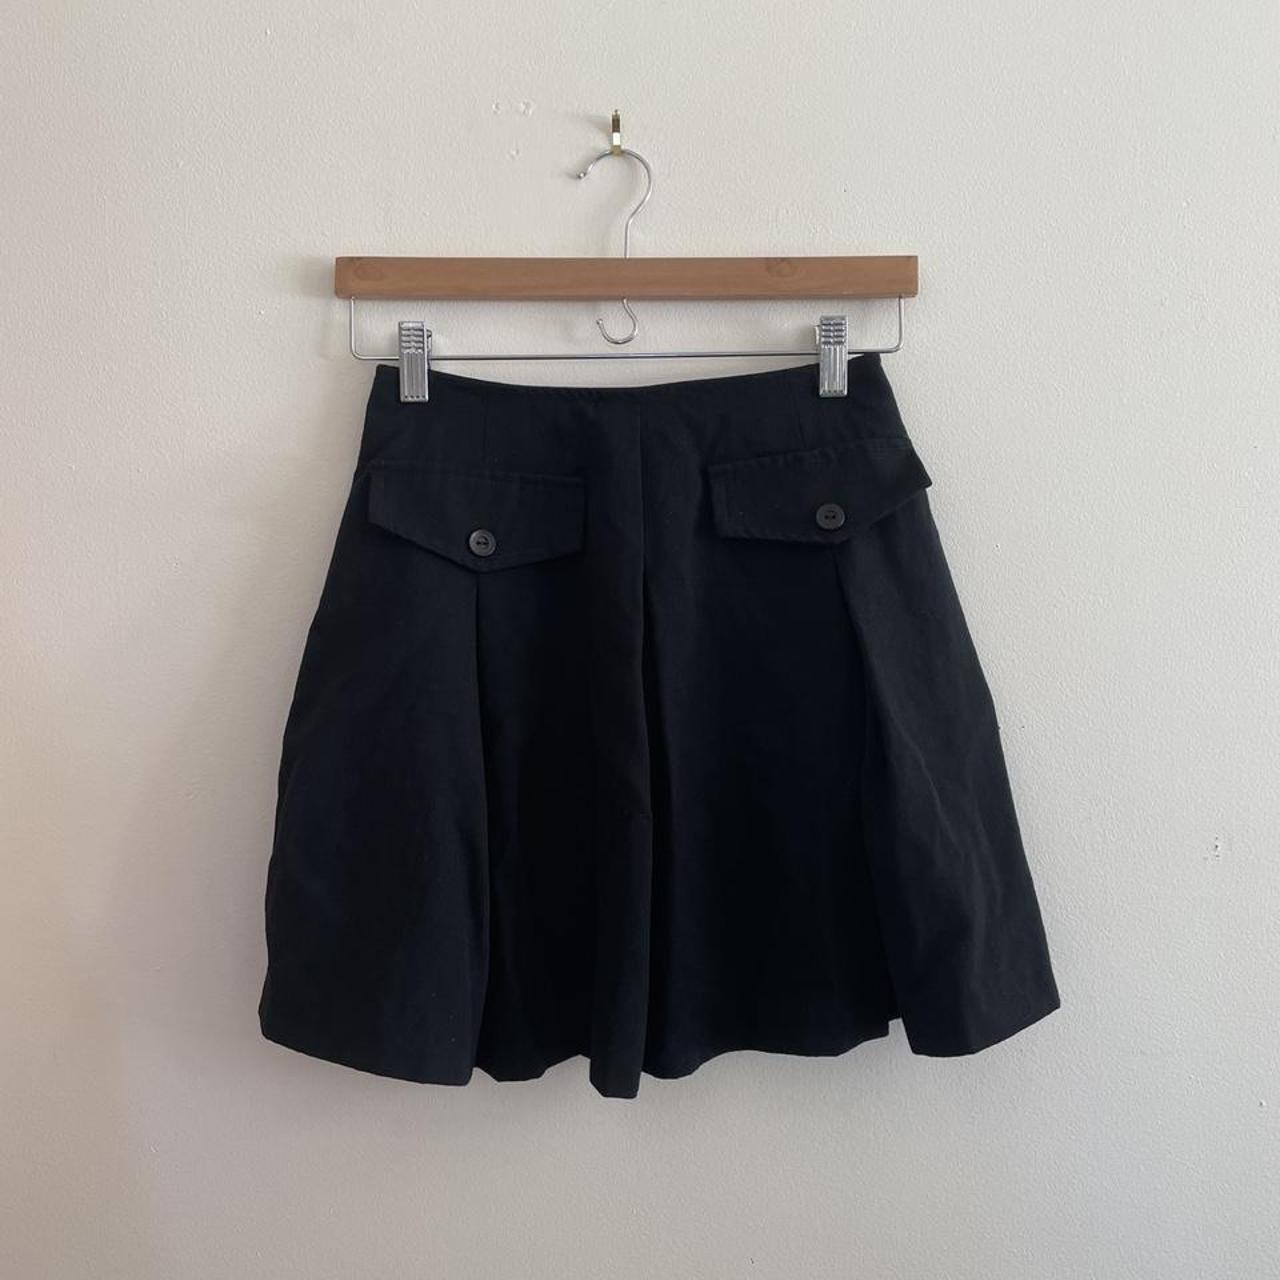 SCHOOLGIRL MINI SKIRT. Super cute and sexy skirt!... - Depop